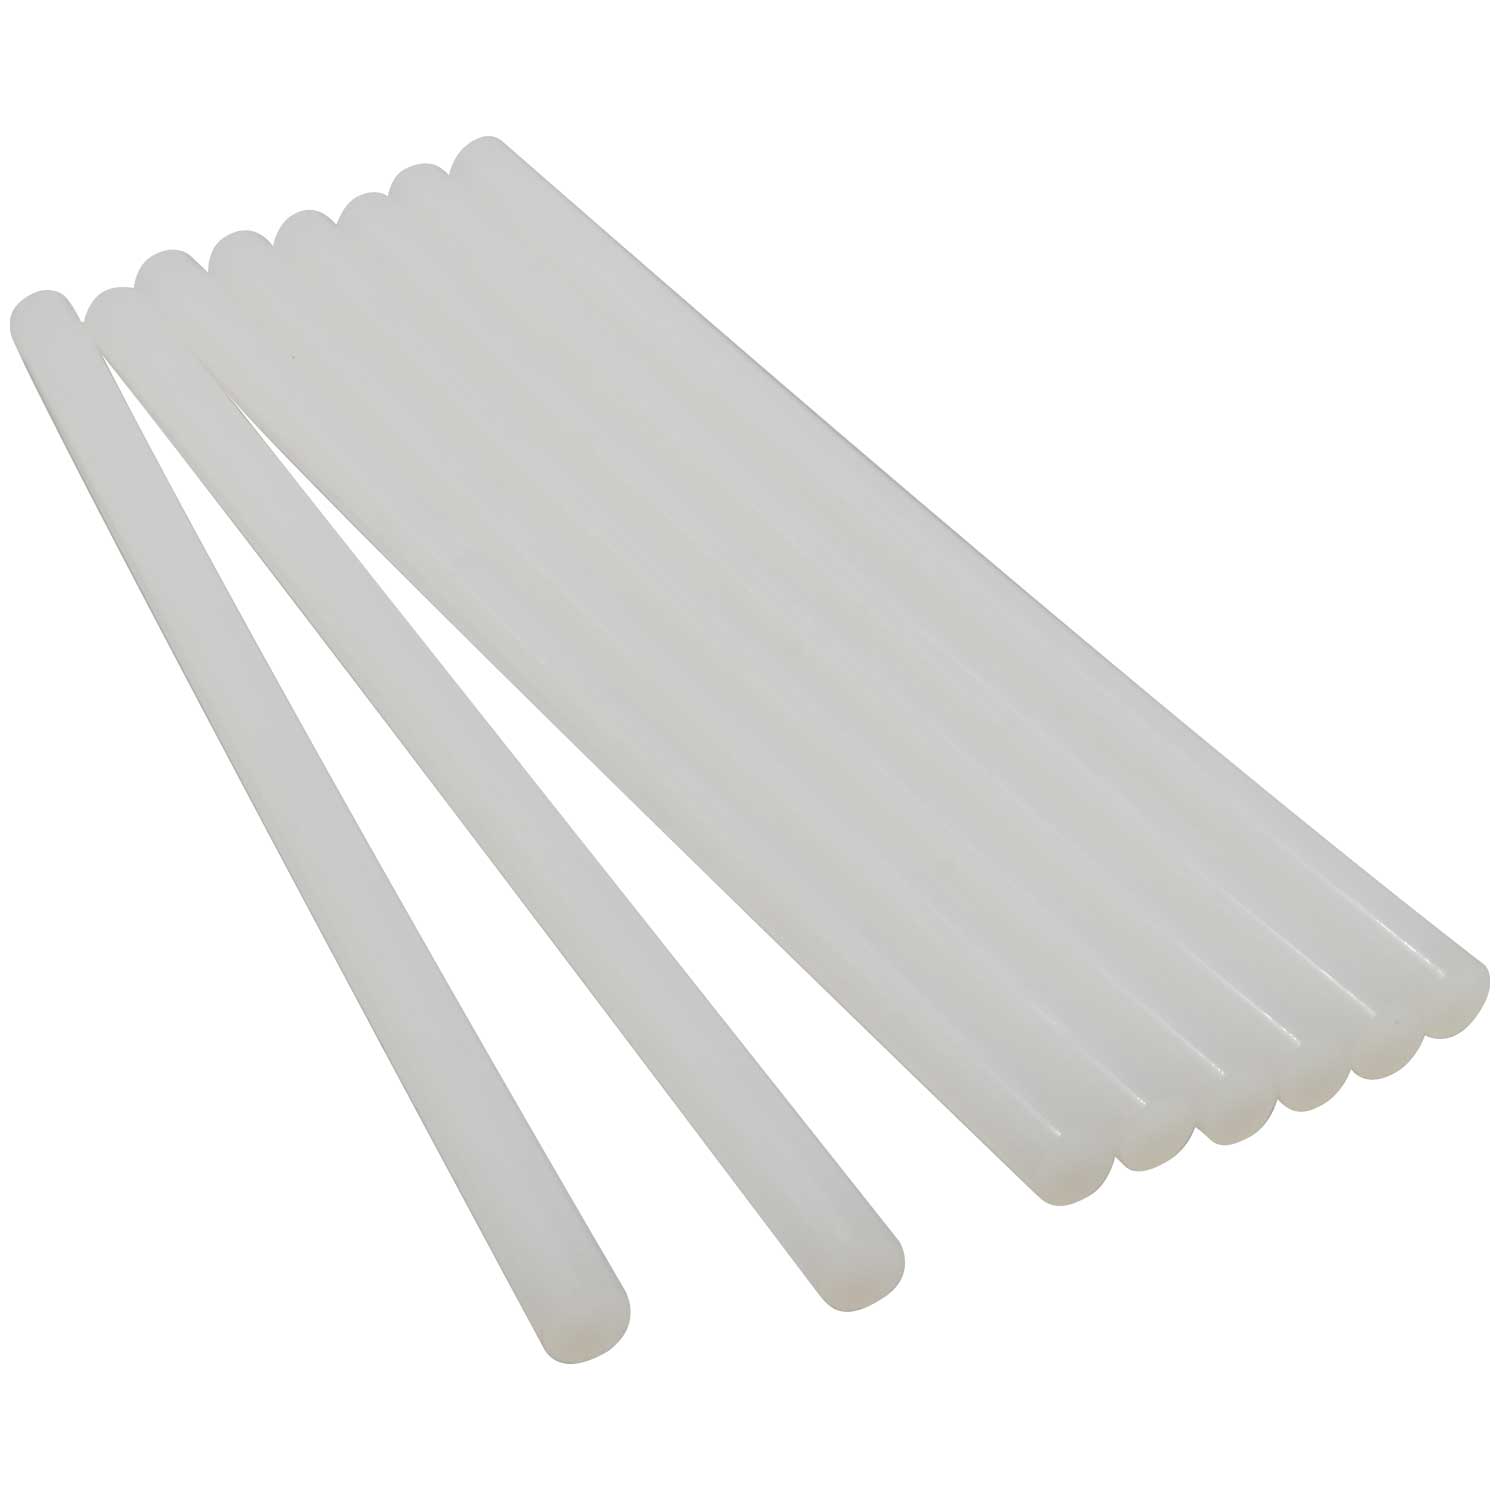 SUREBONDER Clear Hot Glue Sticks For High & Low Temperatures, Mini Size 4  - 12 Pack